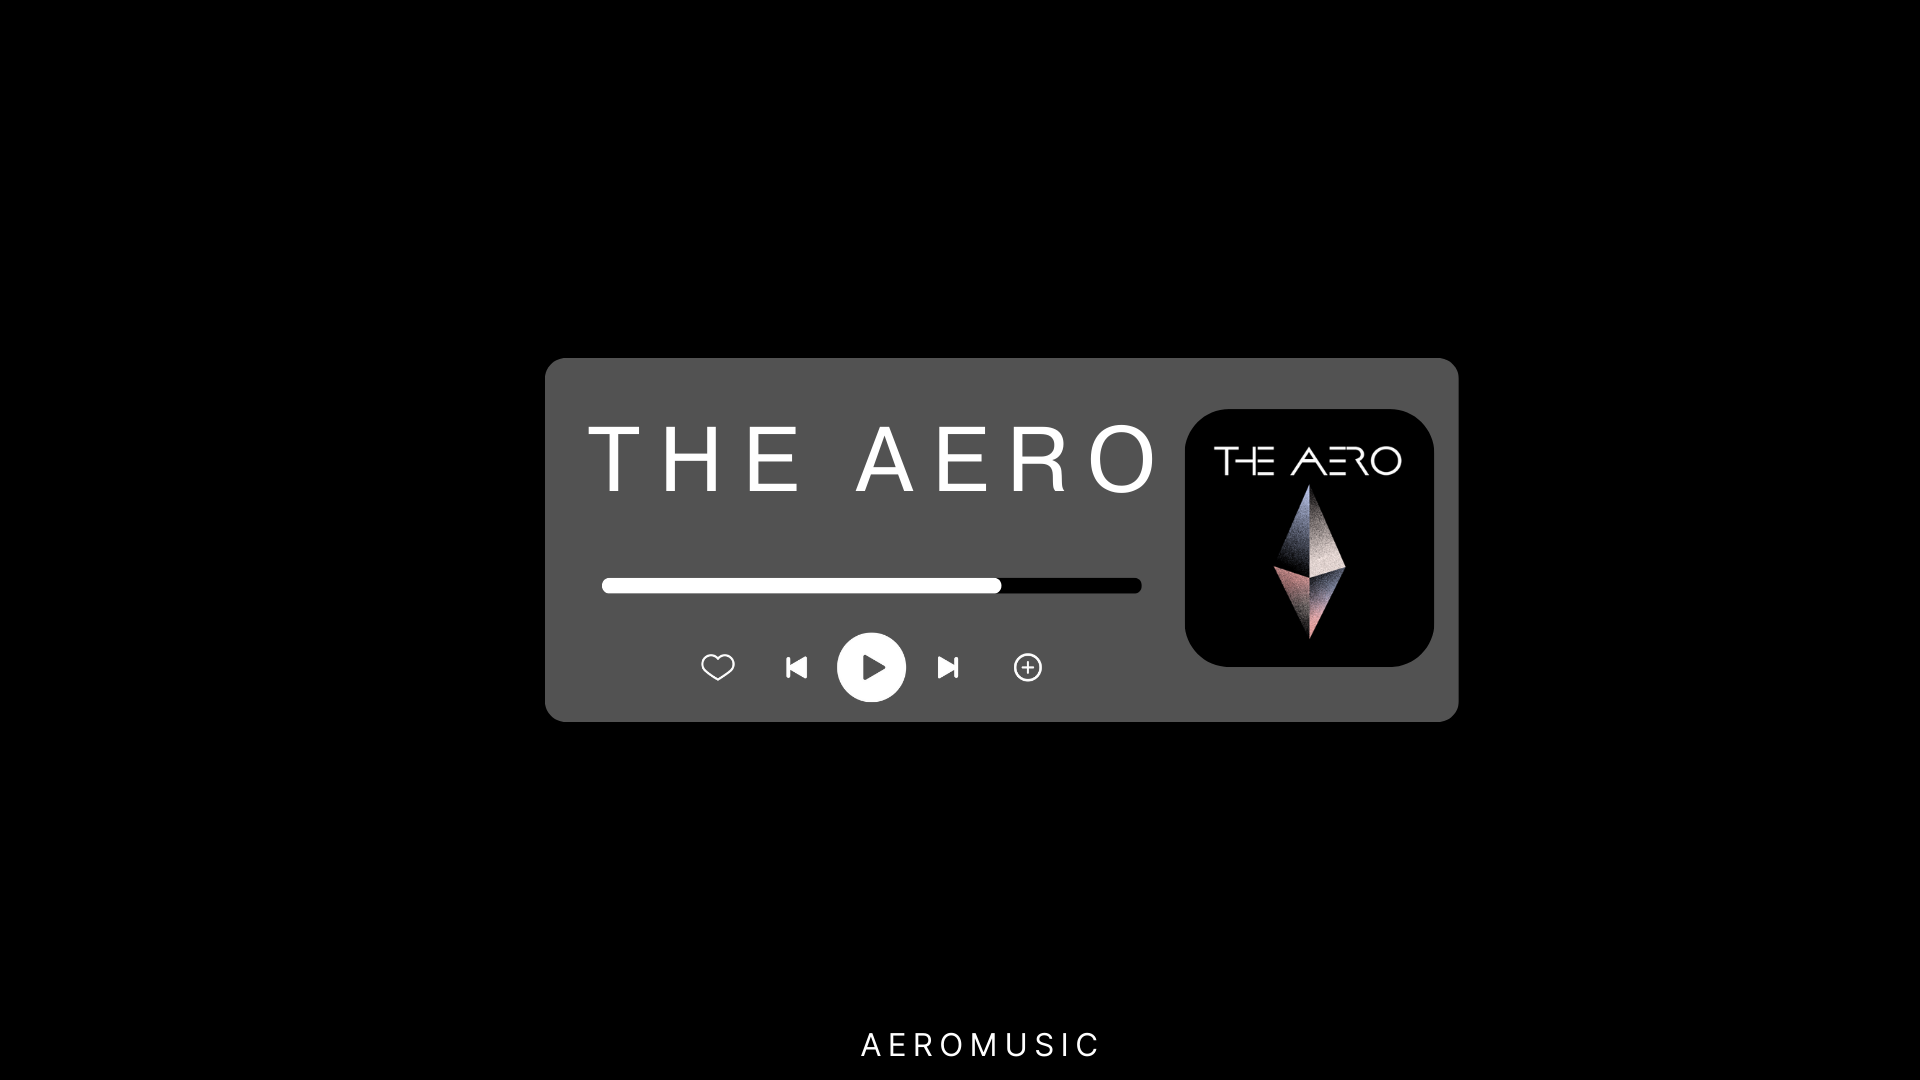 The Aero